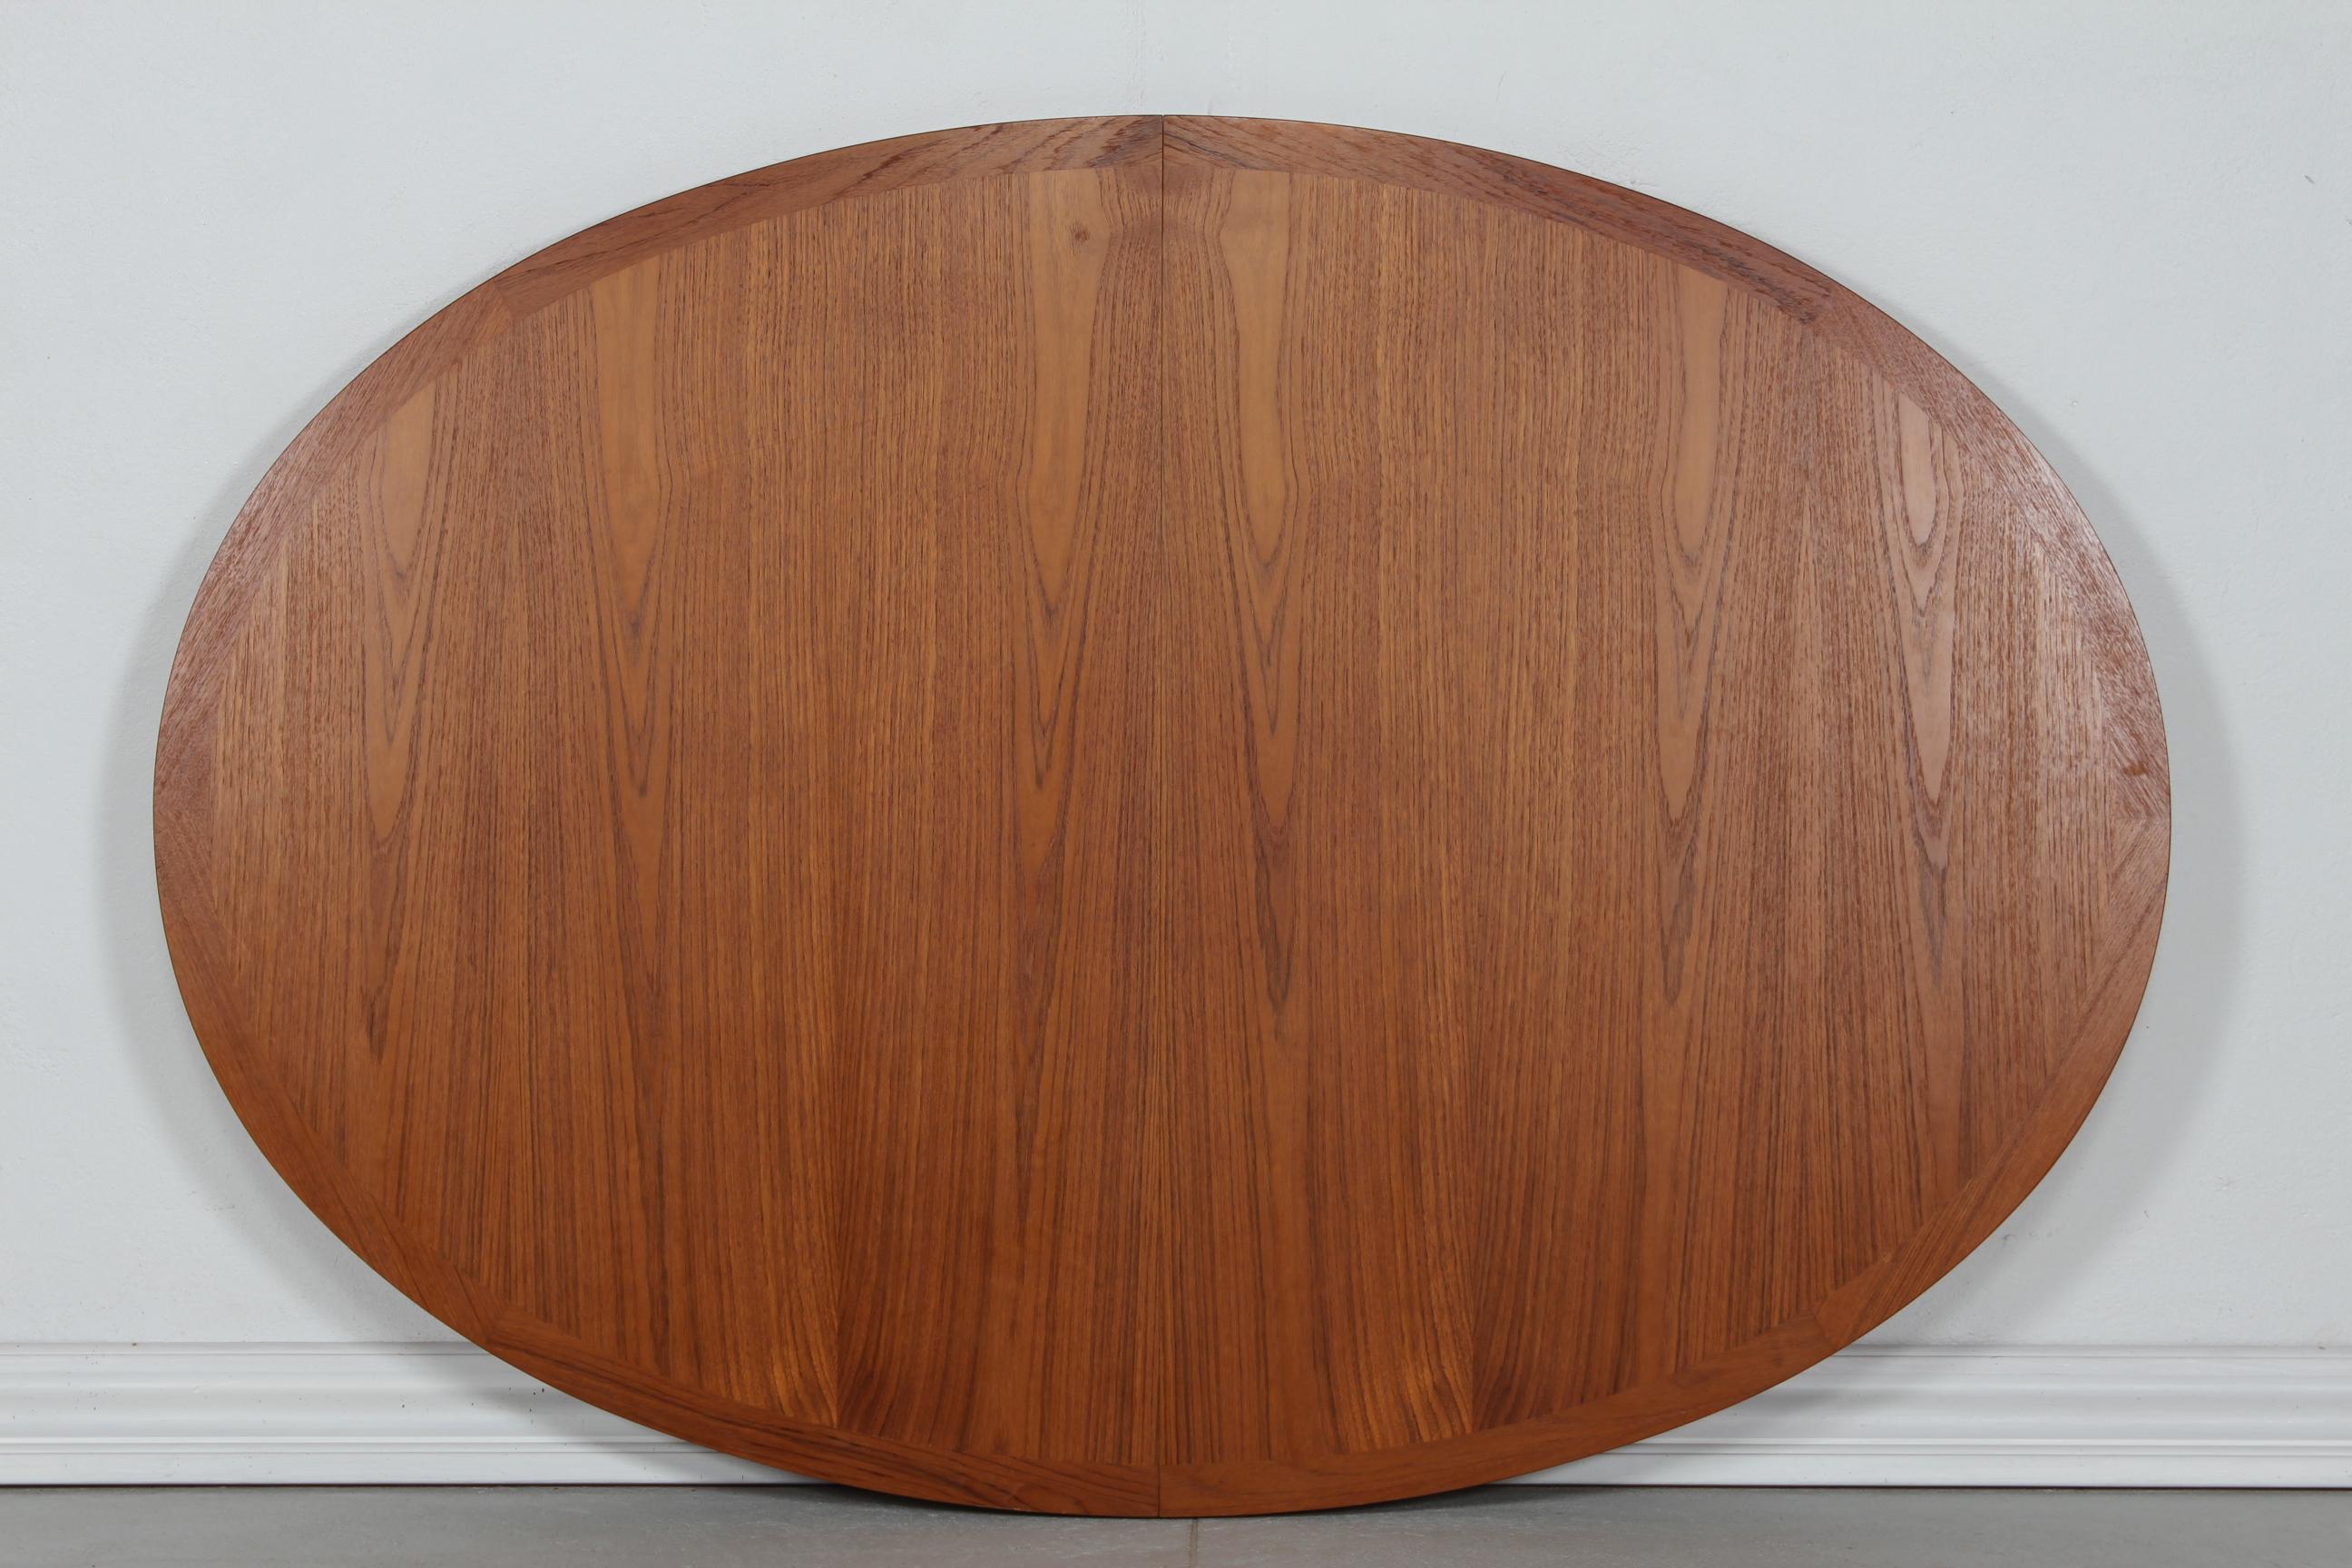 Late 20th Century Danish Modern Oval Pillar Teak Dining Table by Cabinetmaker Dyrlund/Skovby 1970s